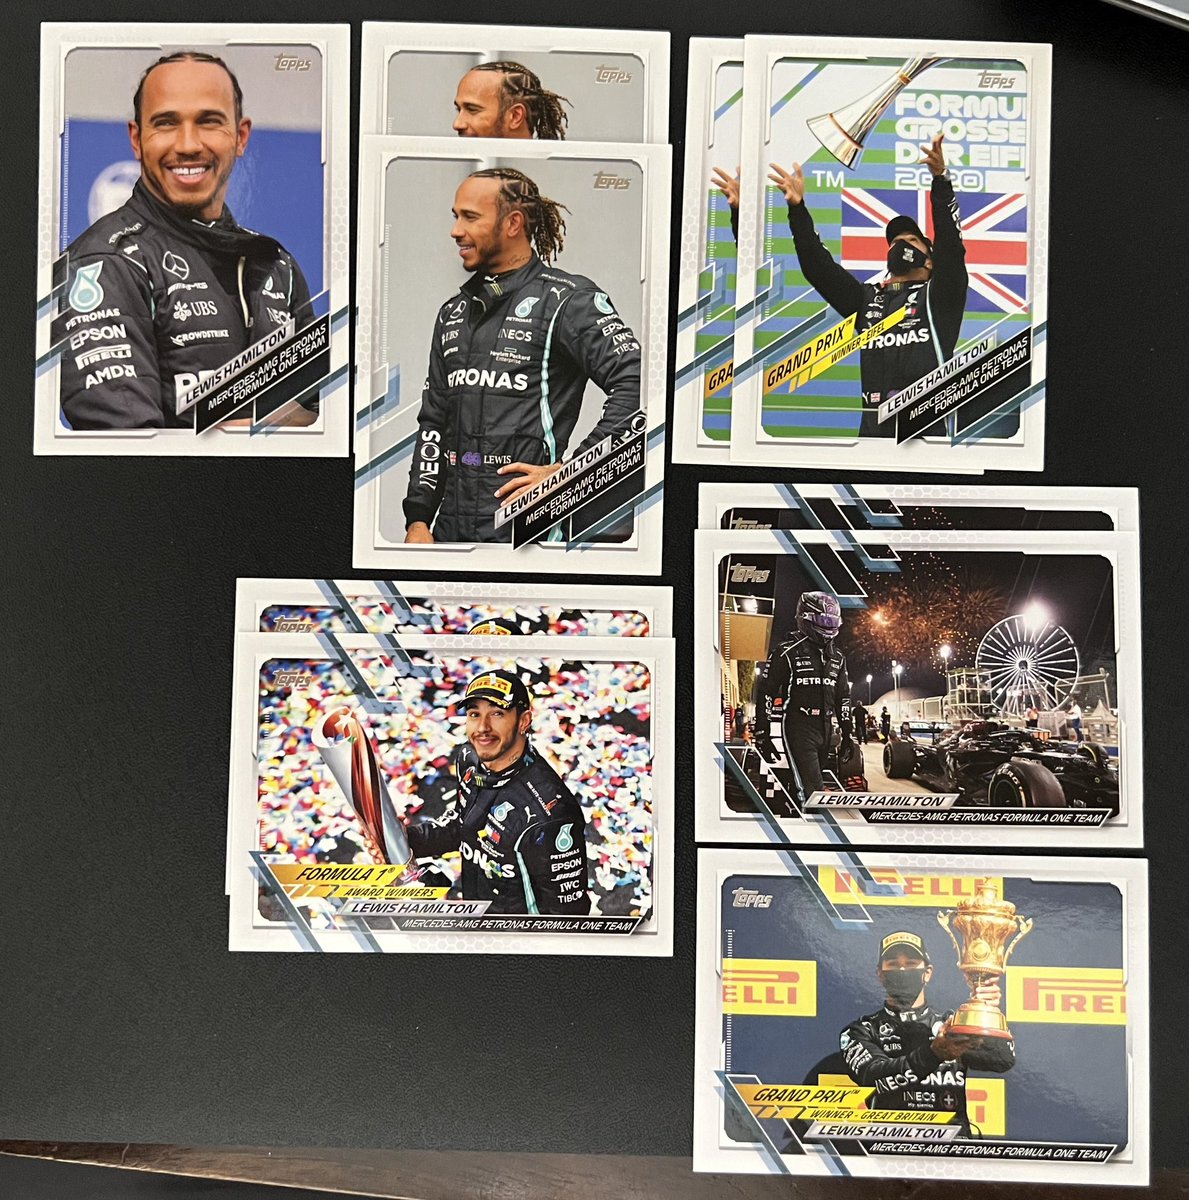 2021 Topps F1
10 card Lewis Hamilton lot
$25.00 dlvd bmwt
@HobbyConnector https://t.co/aMfII9G0na